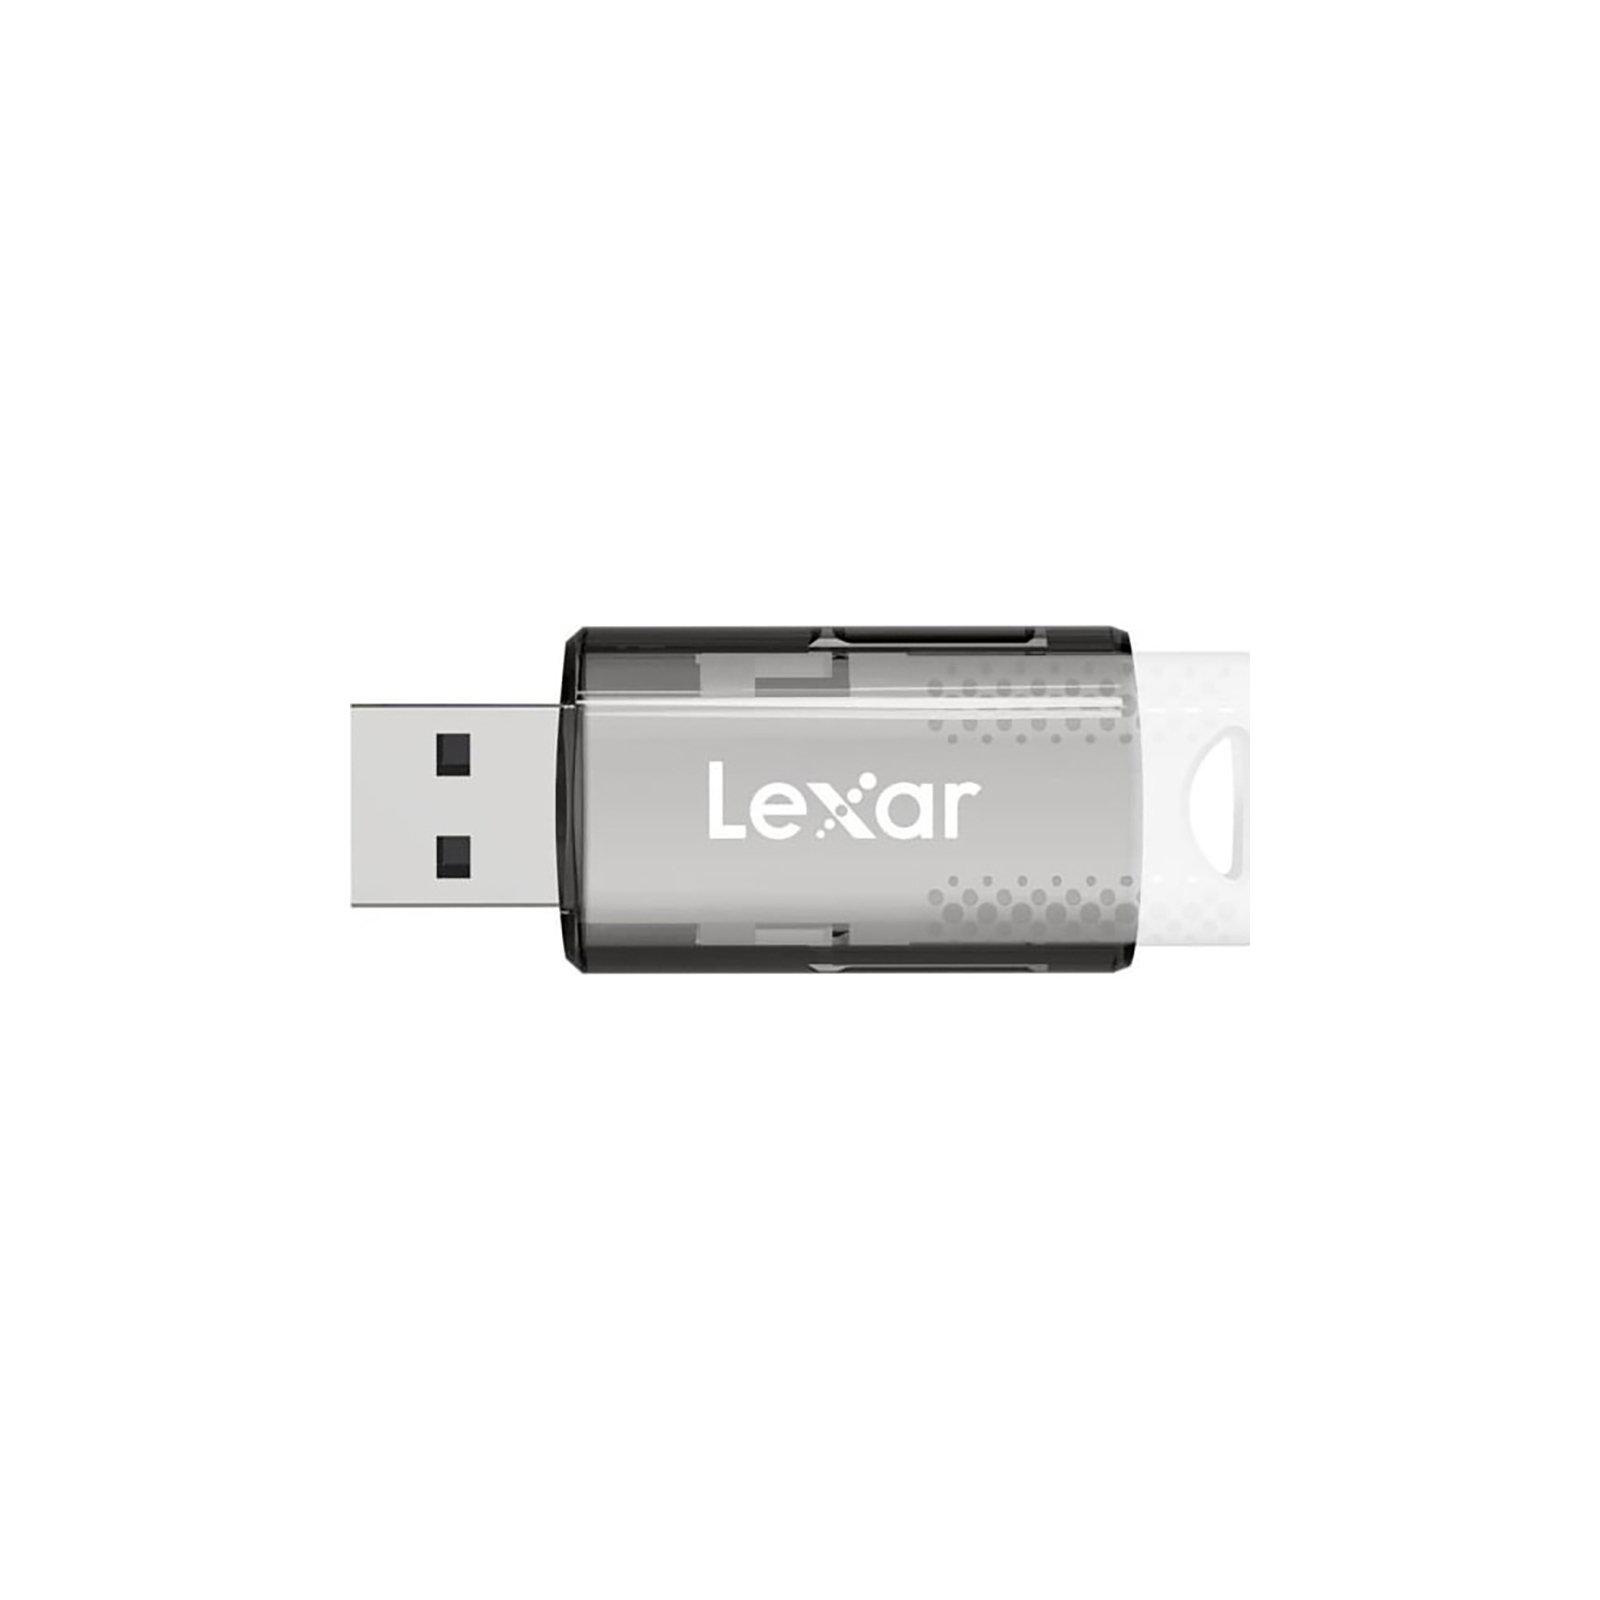 USB флеш накопитель Lexar 128GB S60 USB 2.0 (LJDS060128G-BNBNG) изображение 2